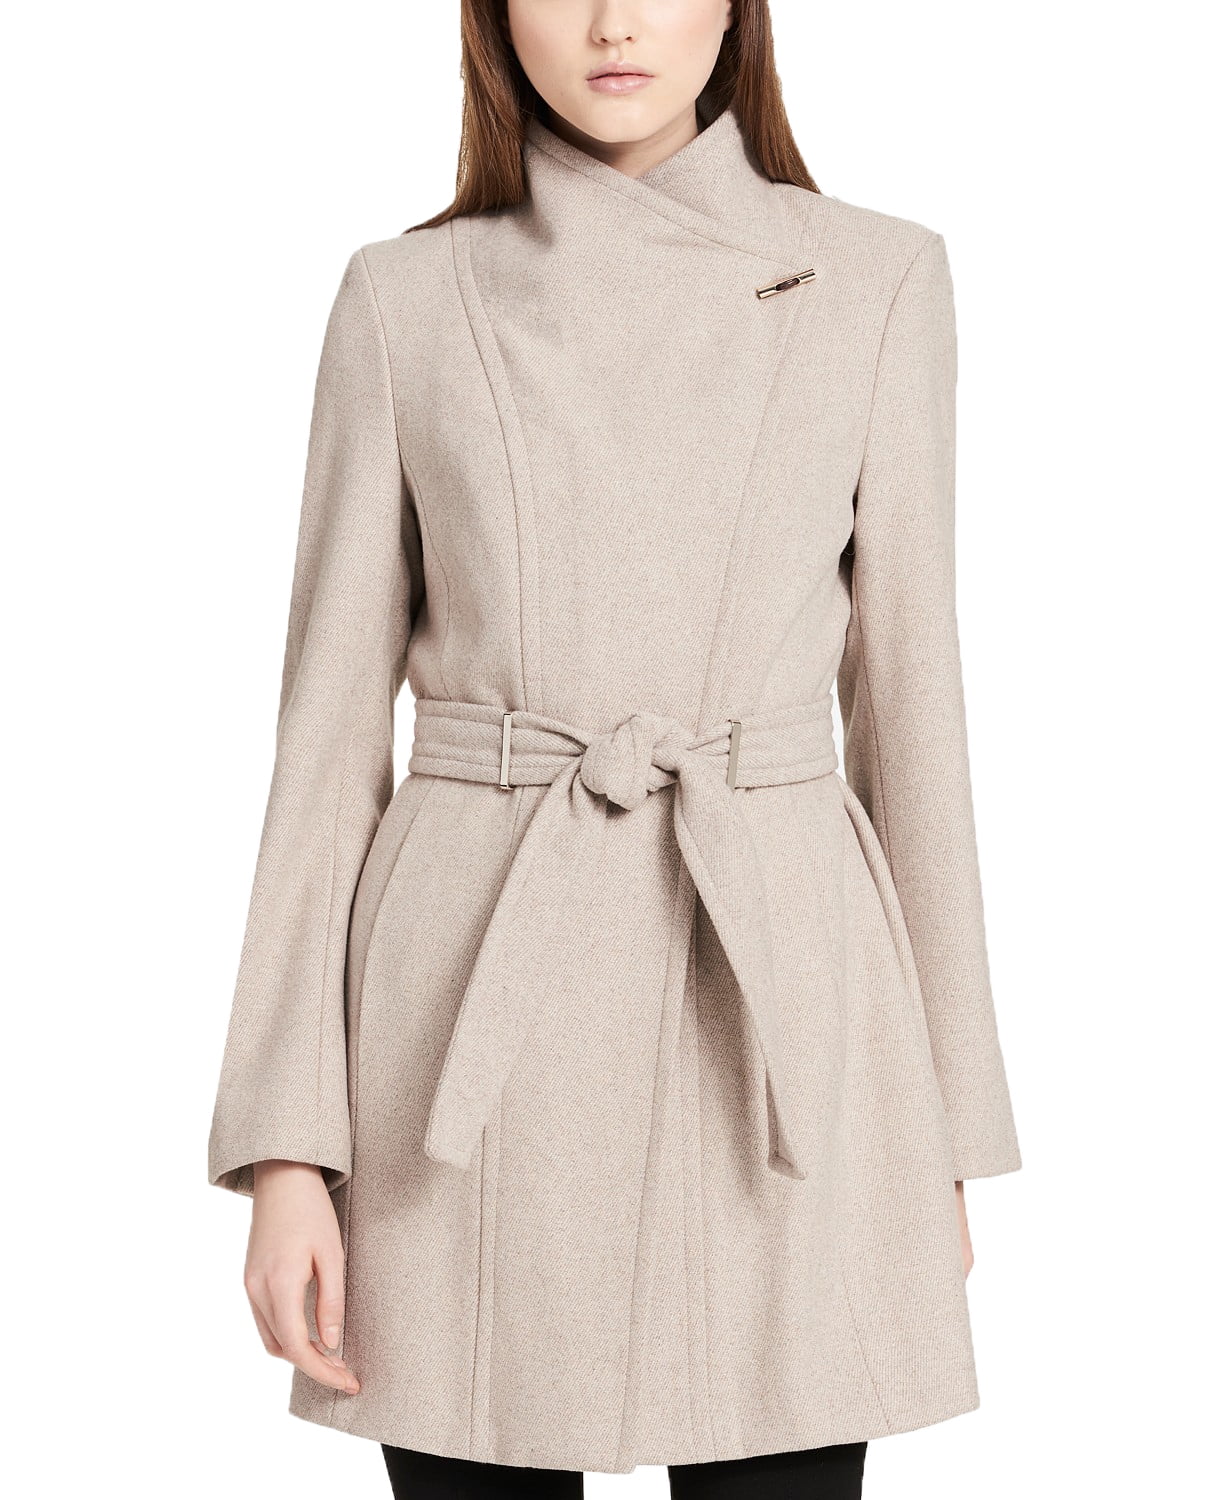 Calvin Klein Womens Belted Asymmetrical Walker Coat (Oatmeal, Small) -  